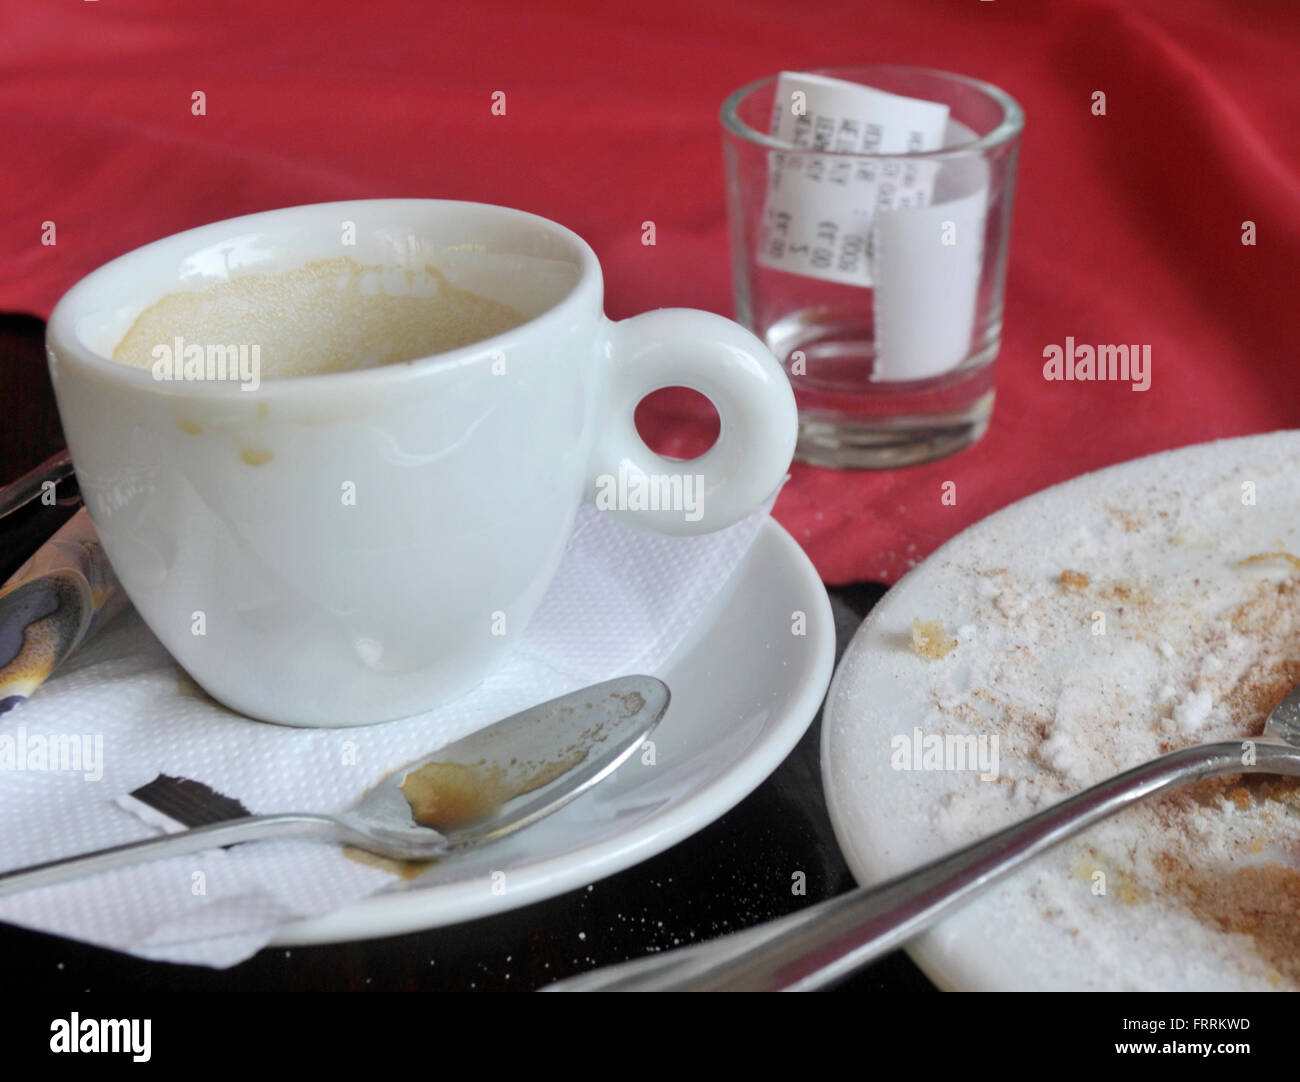 https://c8.alamy.com/comp/FRRKWD/espresso-coffee-cup-on-table-FRRKWD.jpg